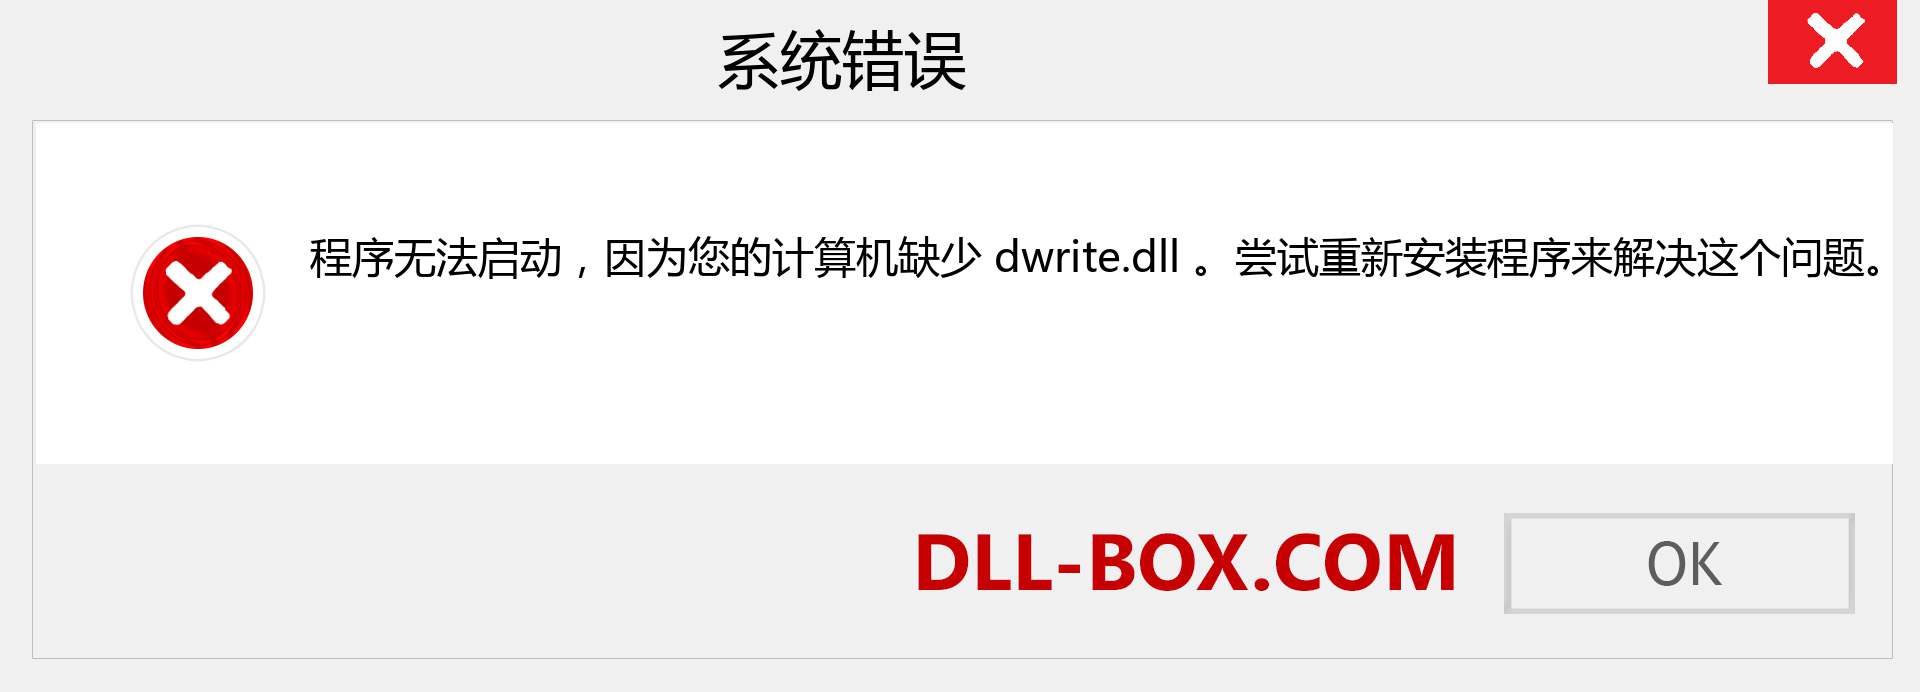 dwrite.dll 文件丢失？。 适用于 Windows 7、8、10 的下载 - 修复 Windows、照片、图像上的 dwrite dll 丢失错误